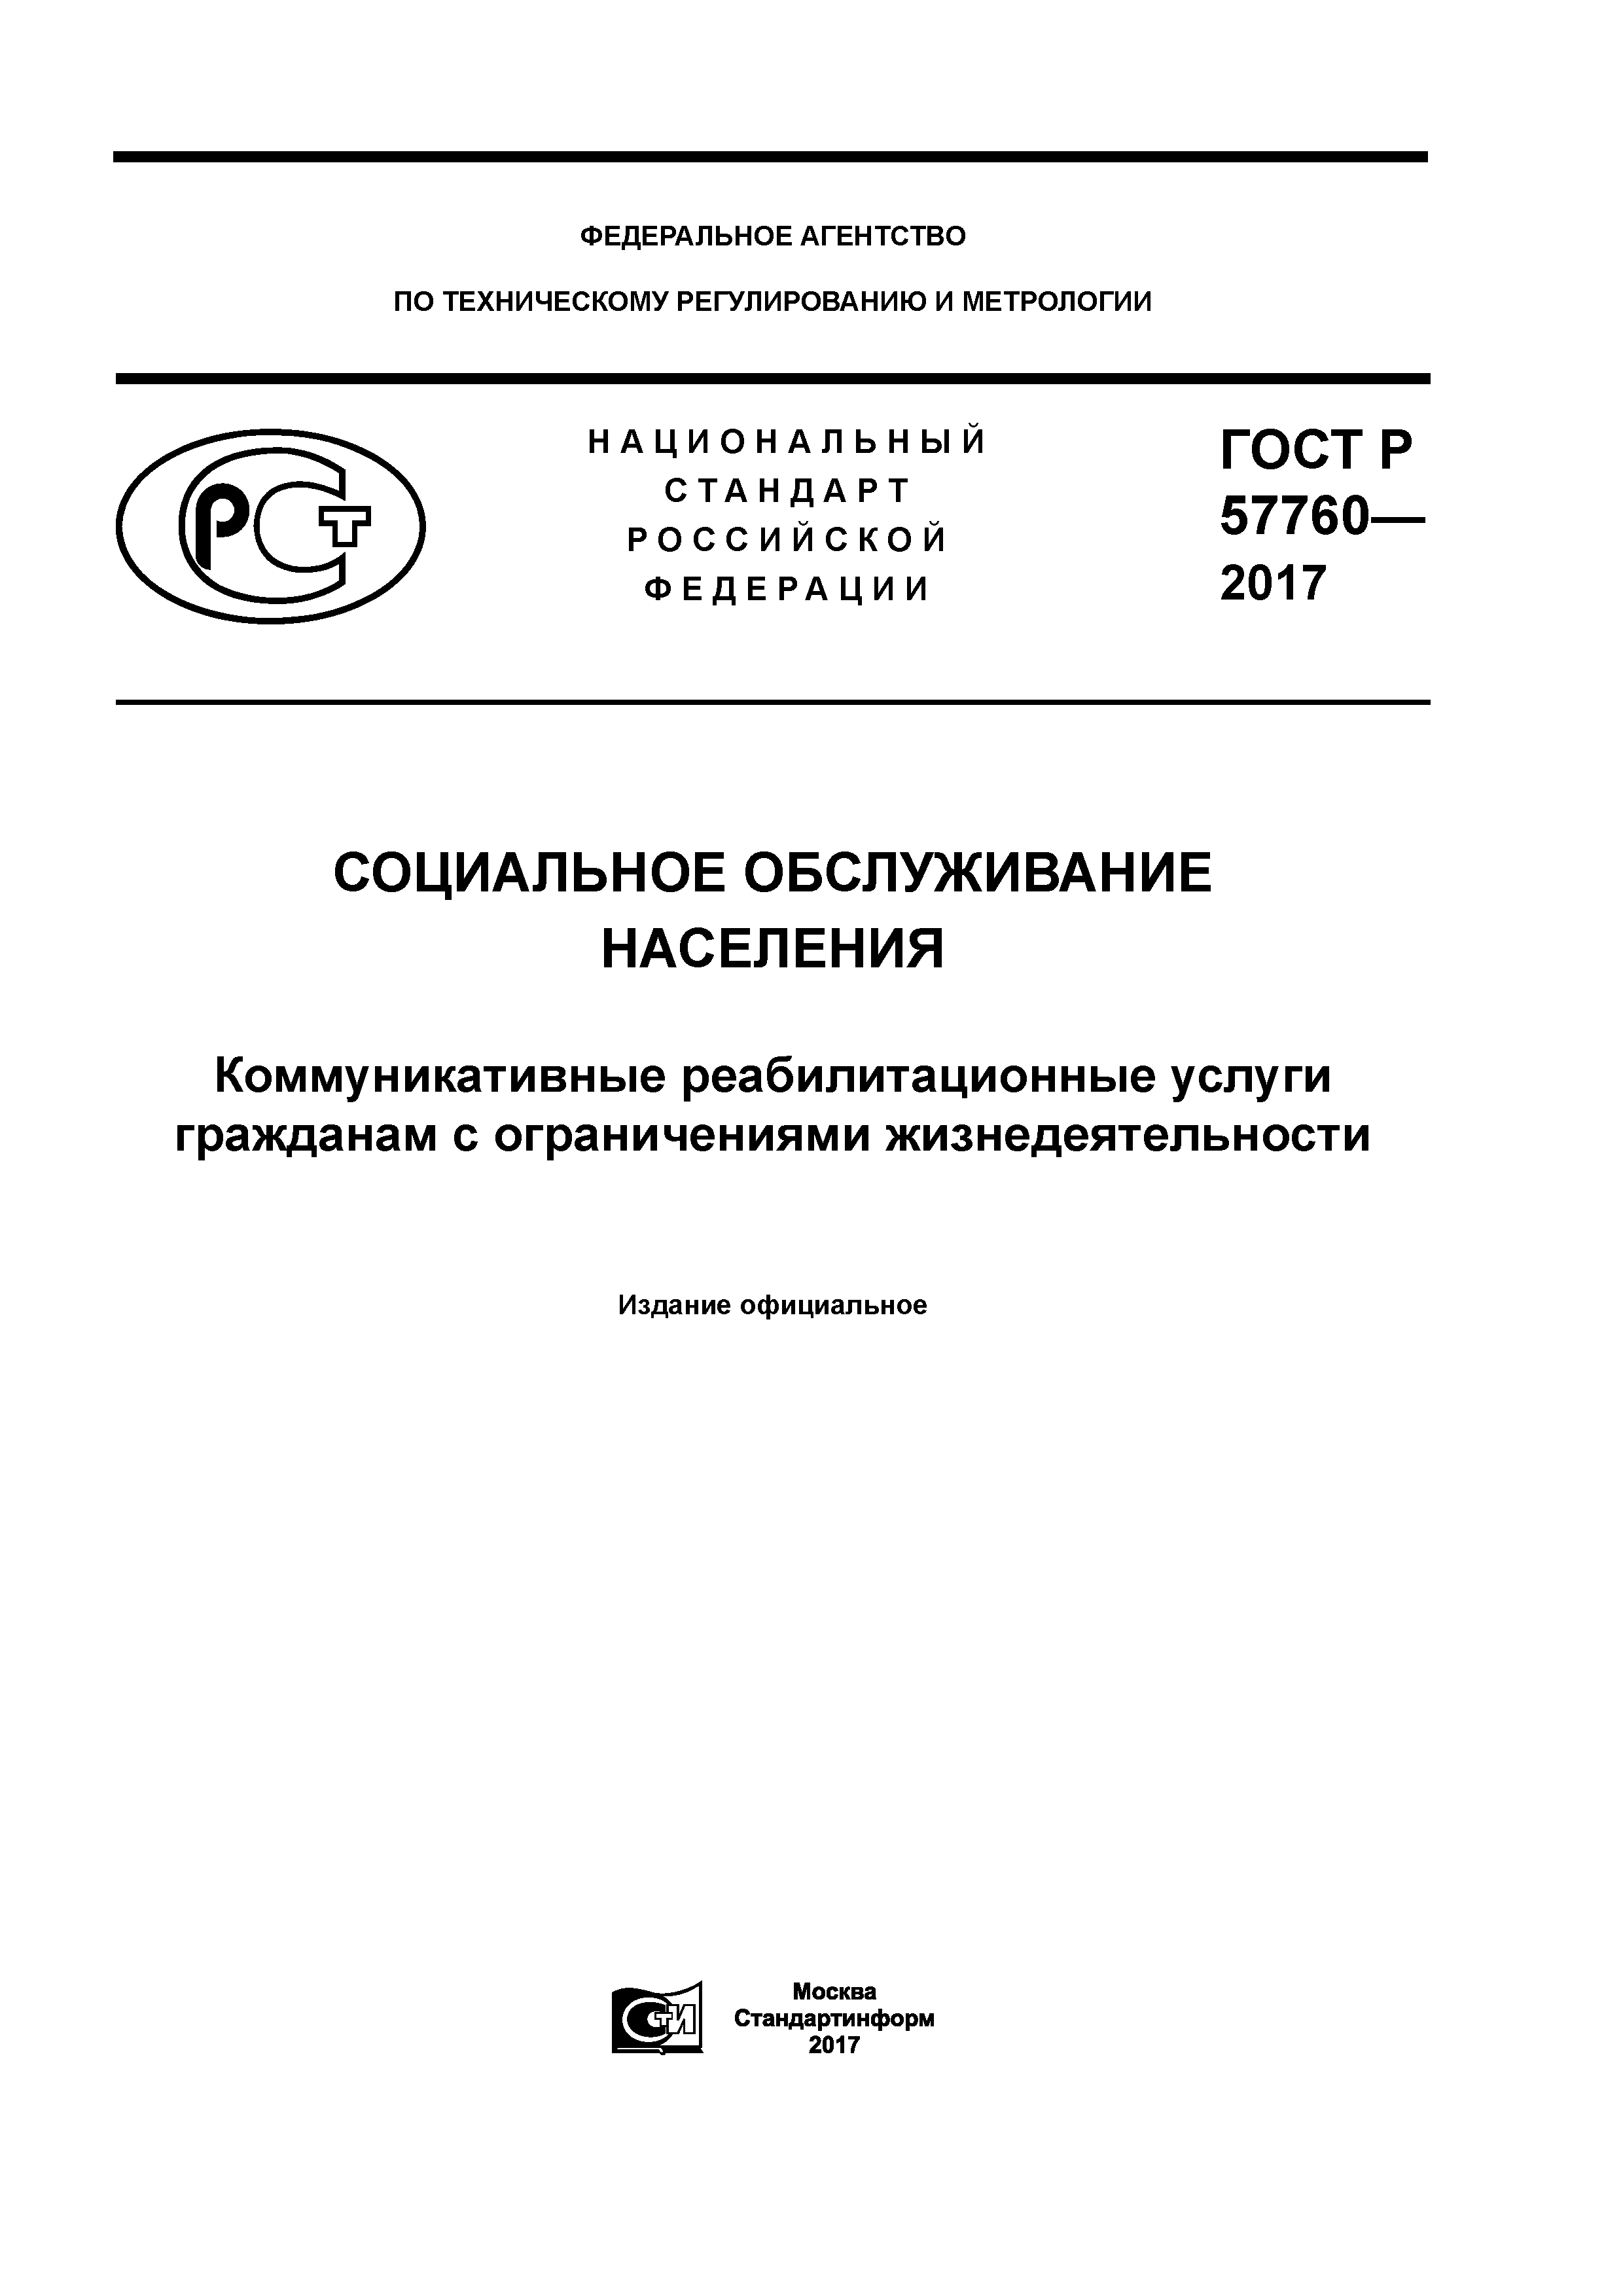 ГОСТ Р 57760-2017